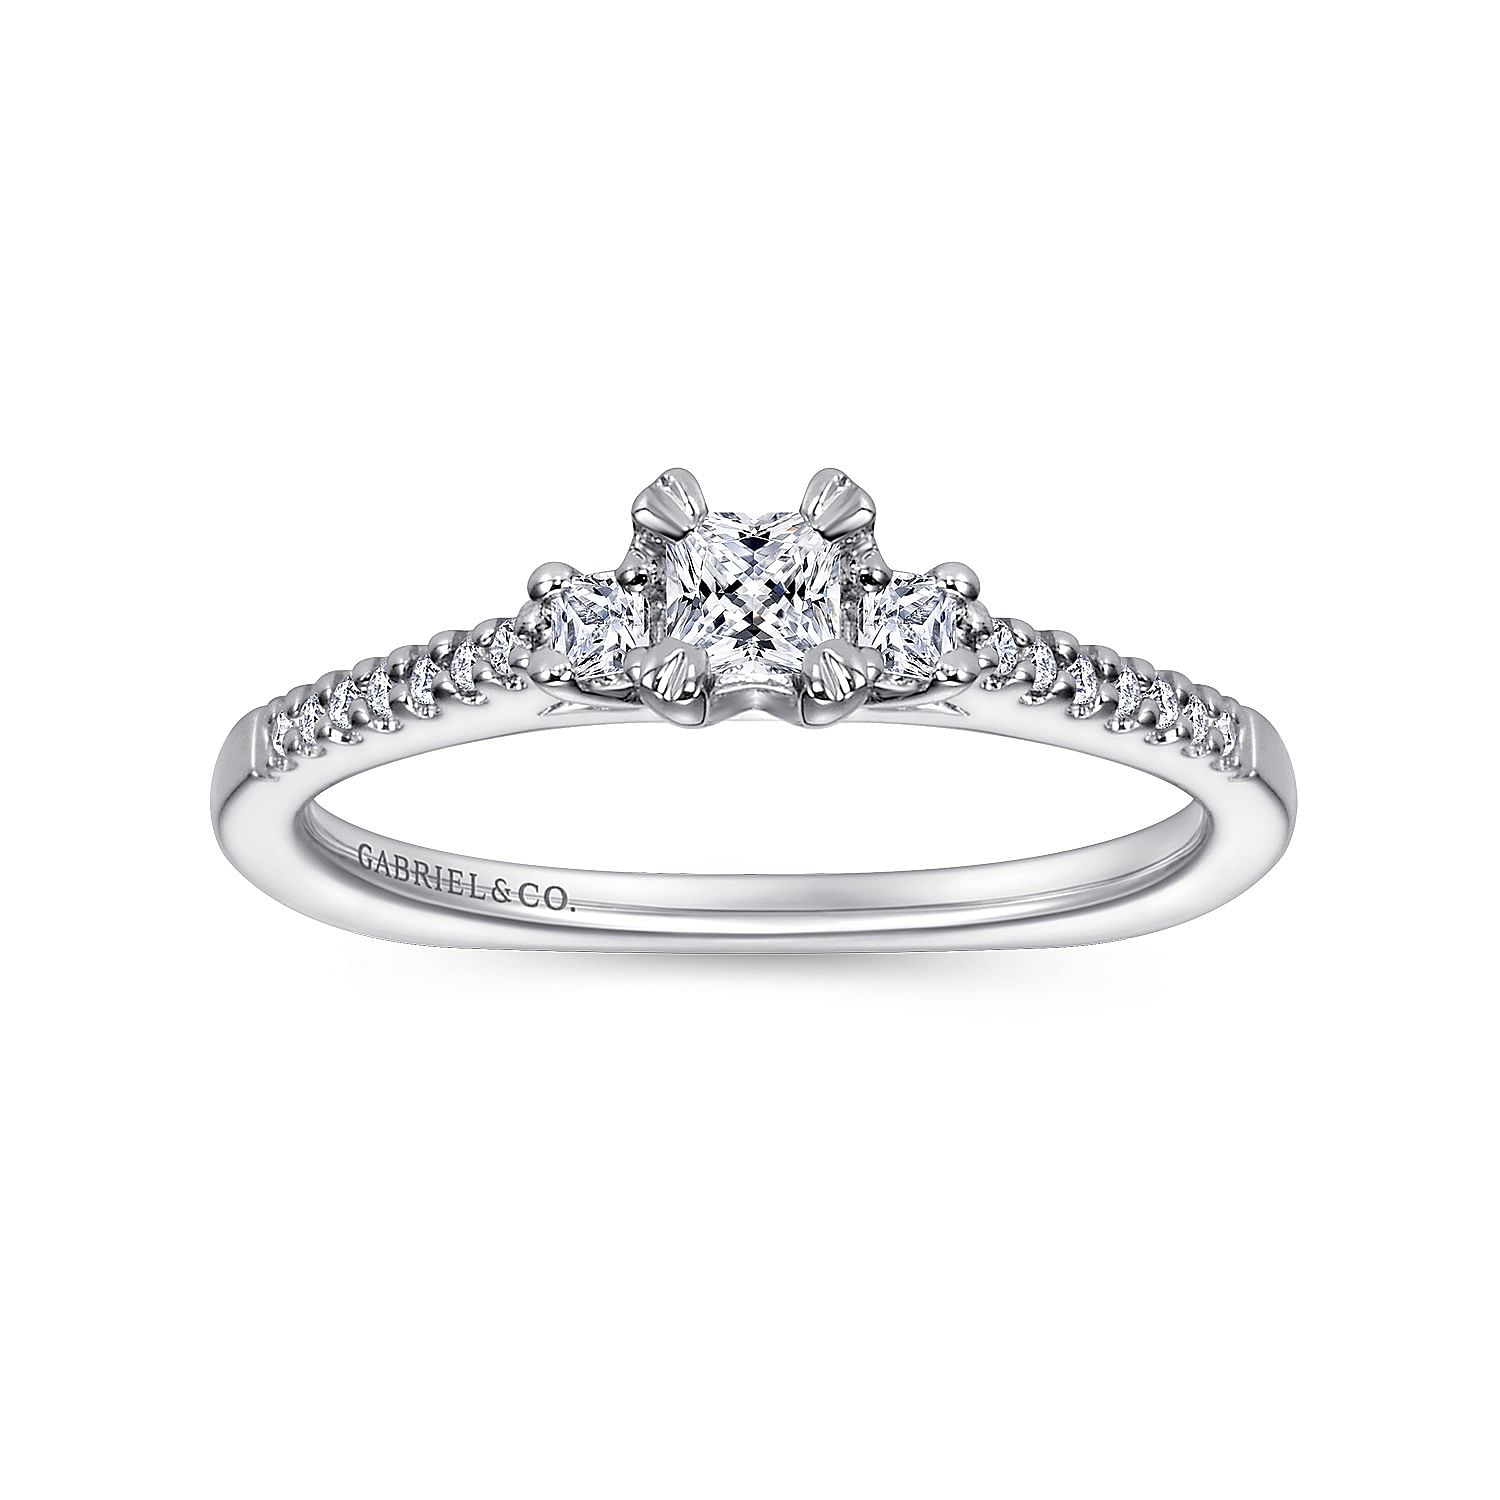 14K White Gold Princess Cut Three Stone Complete Diamond Engagement Ring